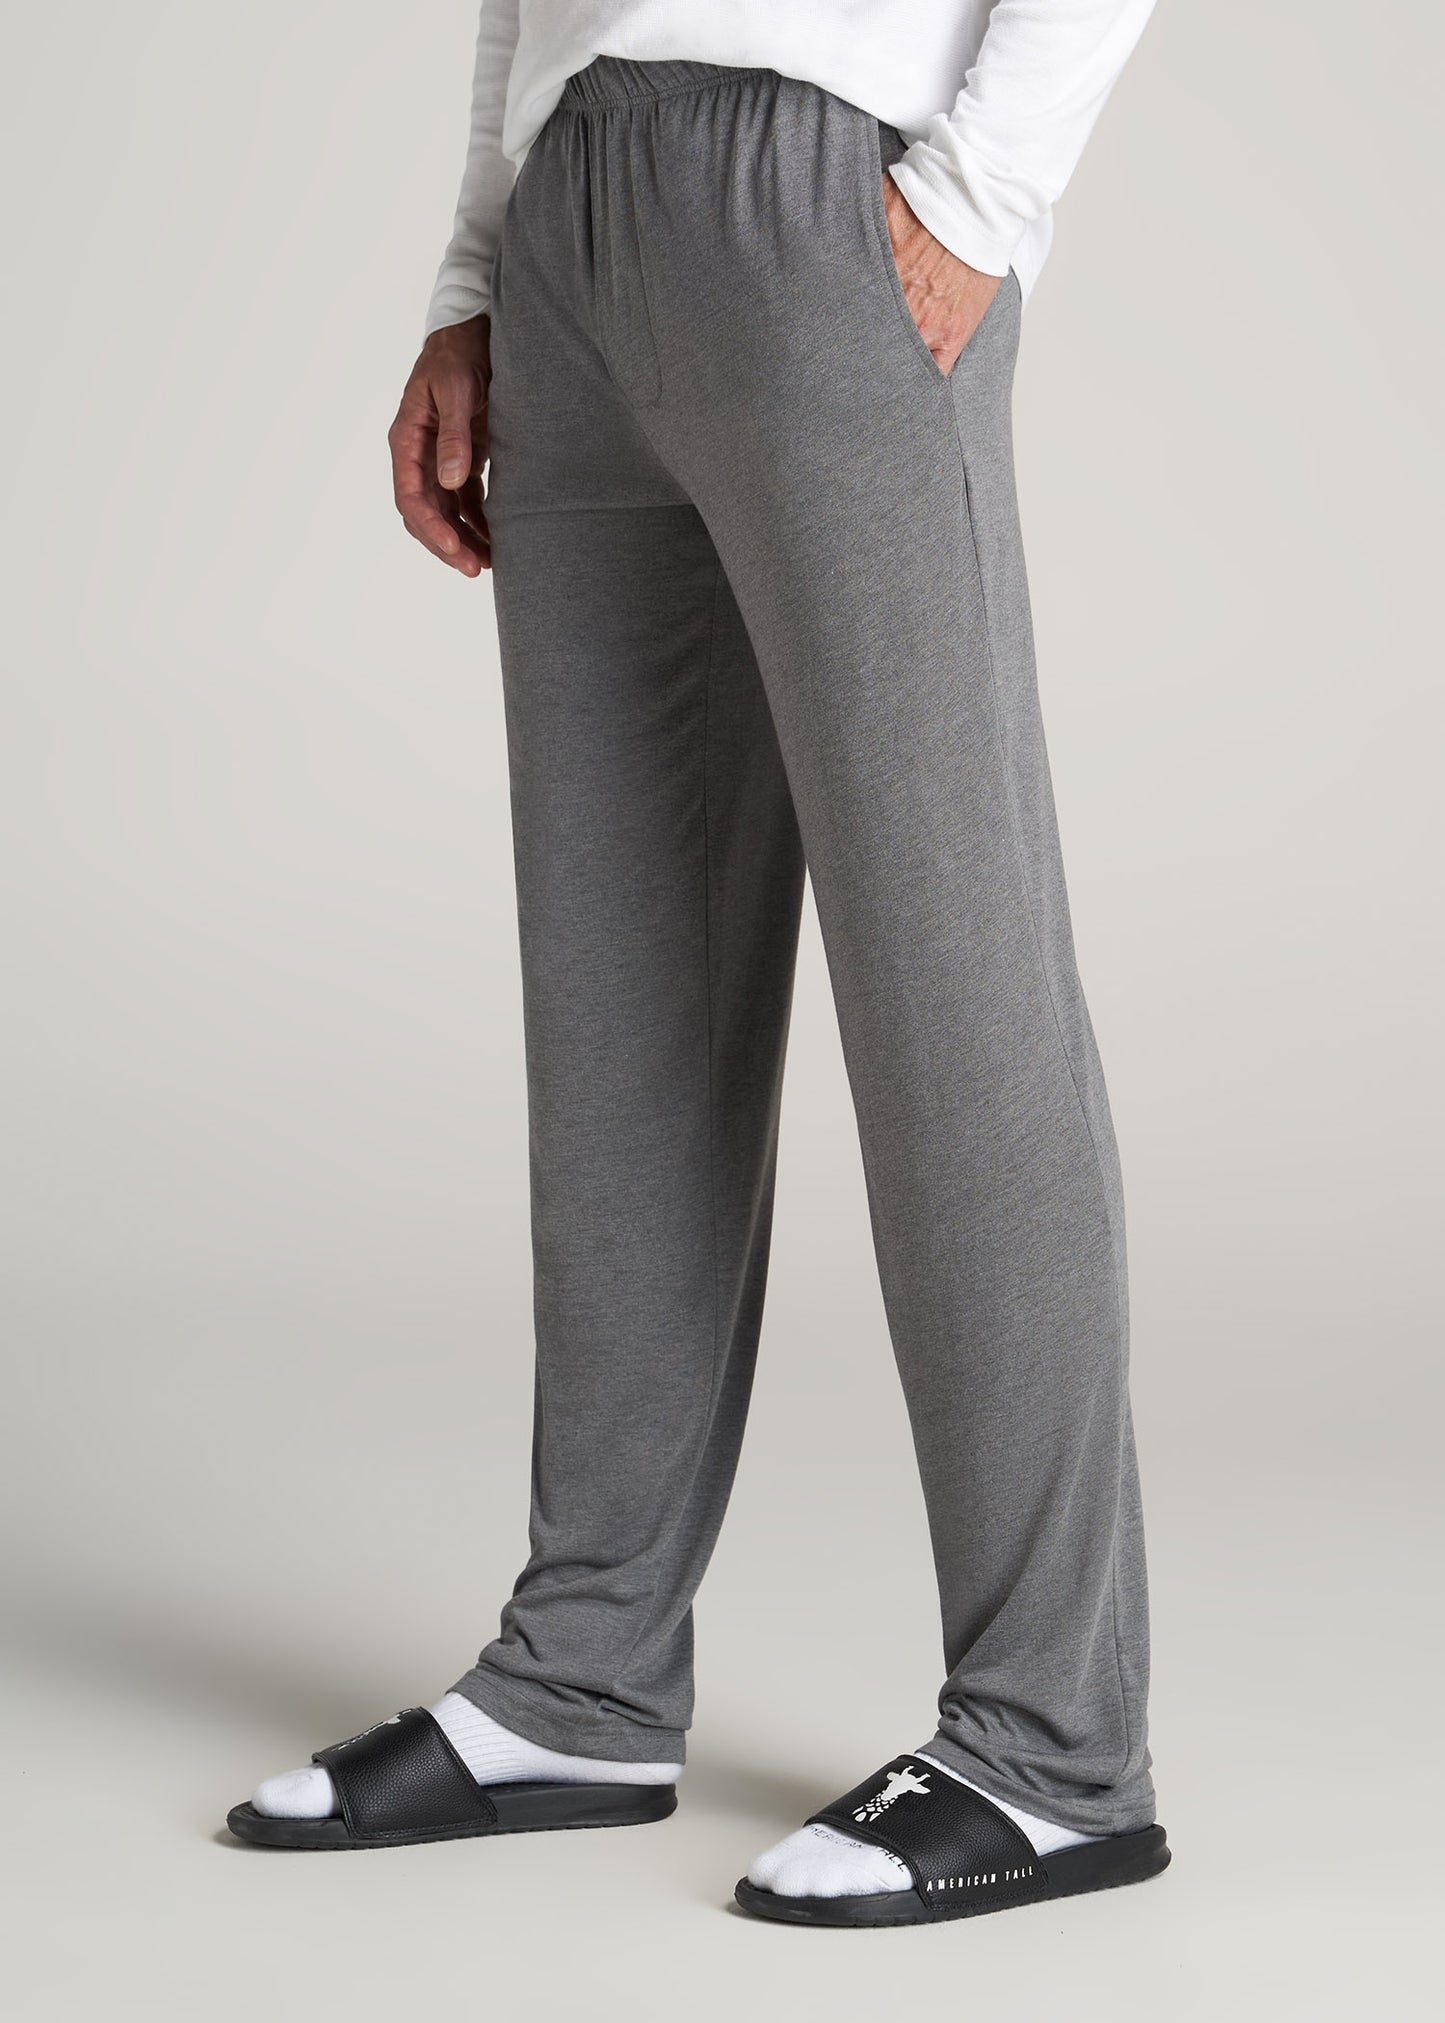 Lounge Pajama Pants for Tall Men in Black